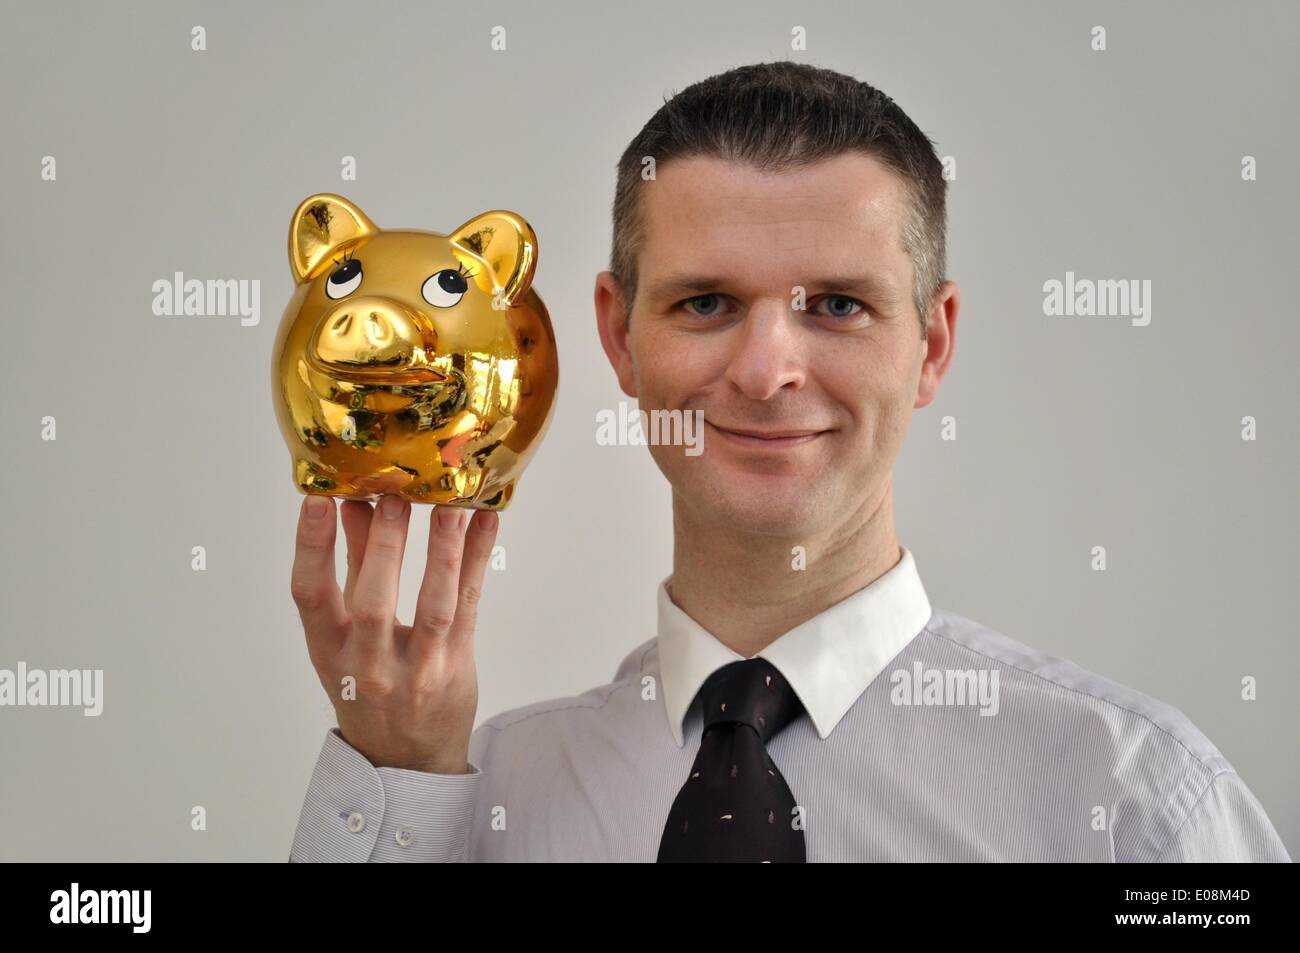 Illustration - A man holds a golden piggy bank in Germany, 27 February 2011. Fotoarchiv für Zeitgeschichte - NO WIRE SERVICE Stock Photo